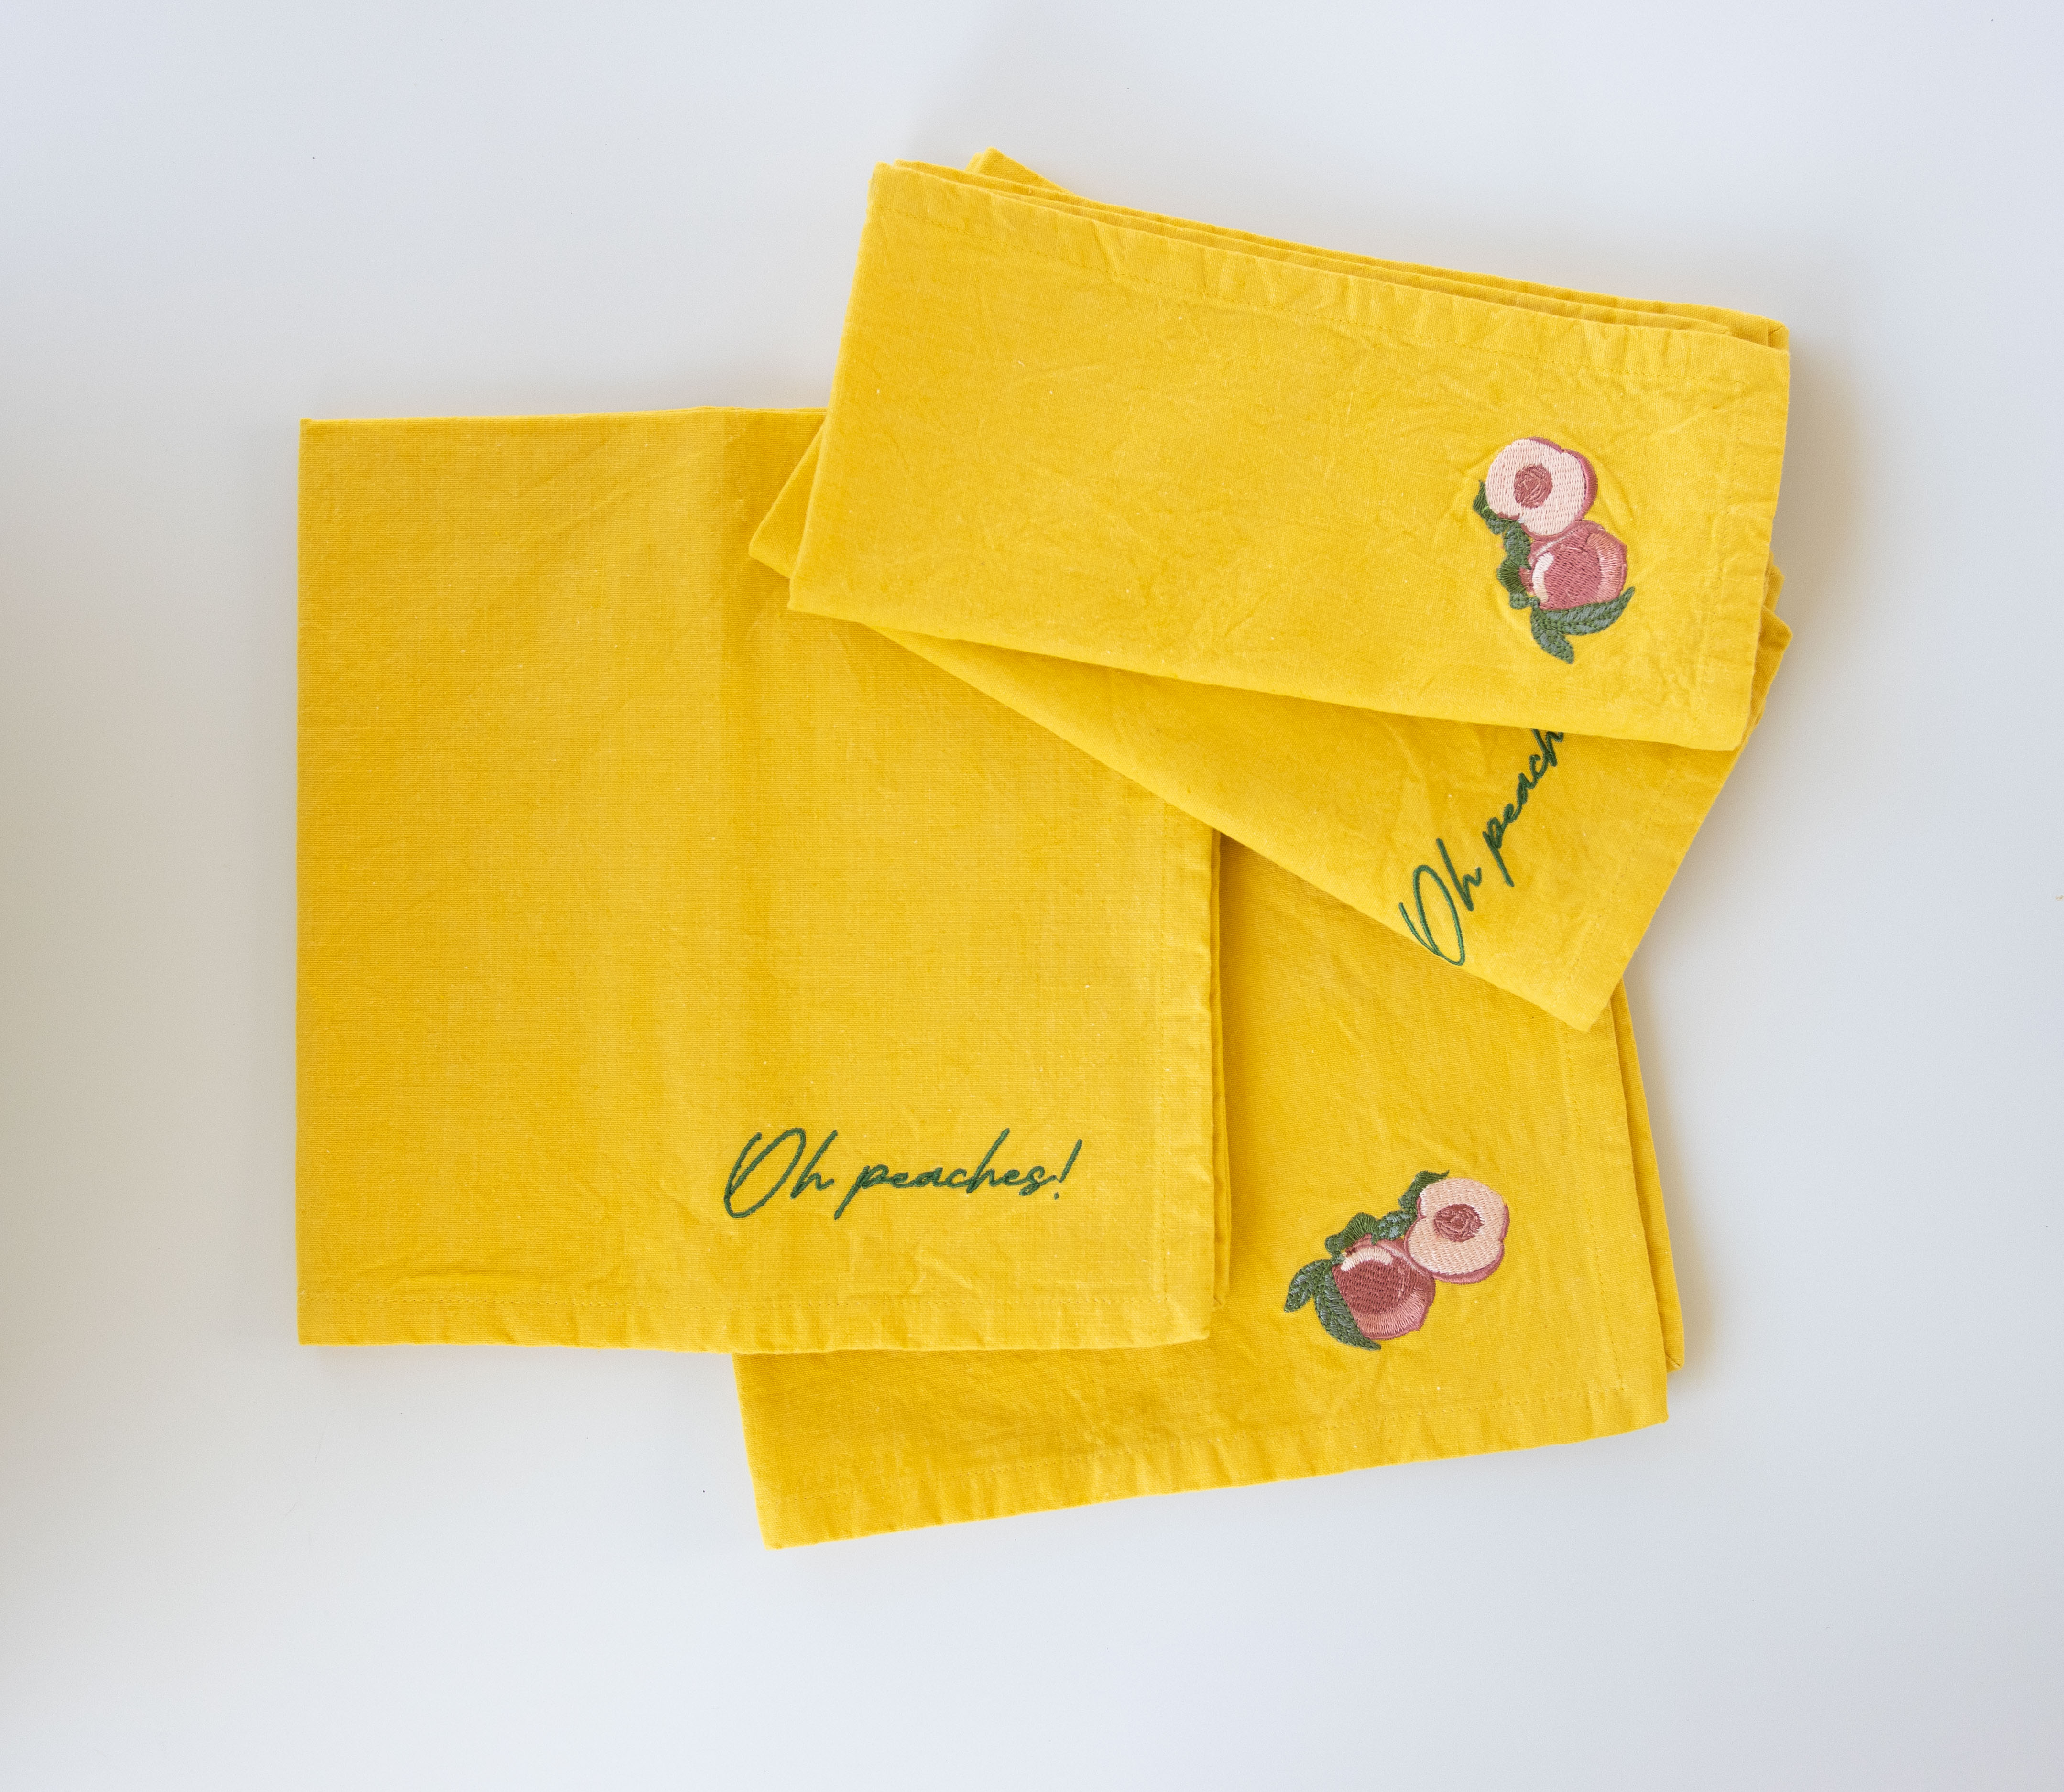 Oh Peaches! - Cloth napkin, set of 4